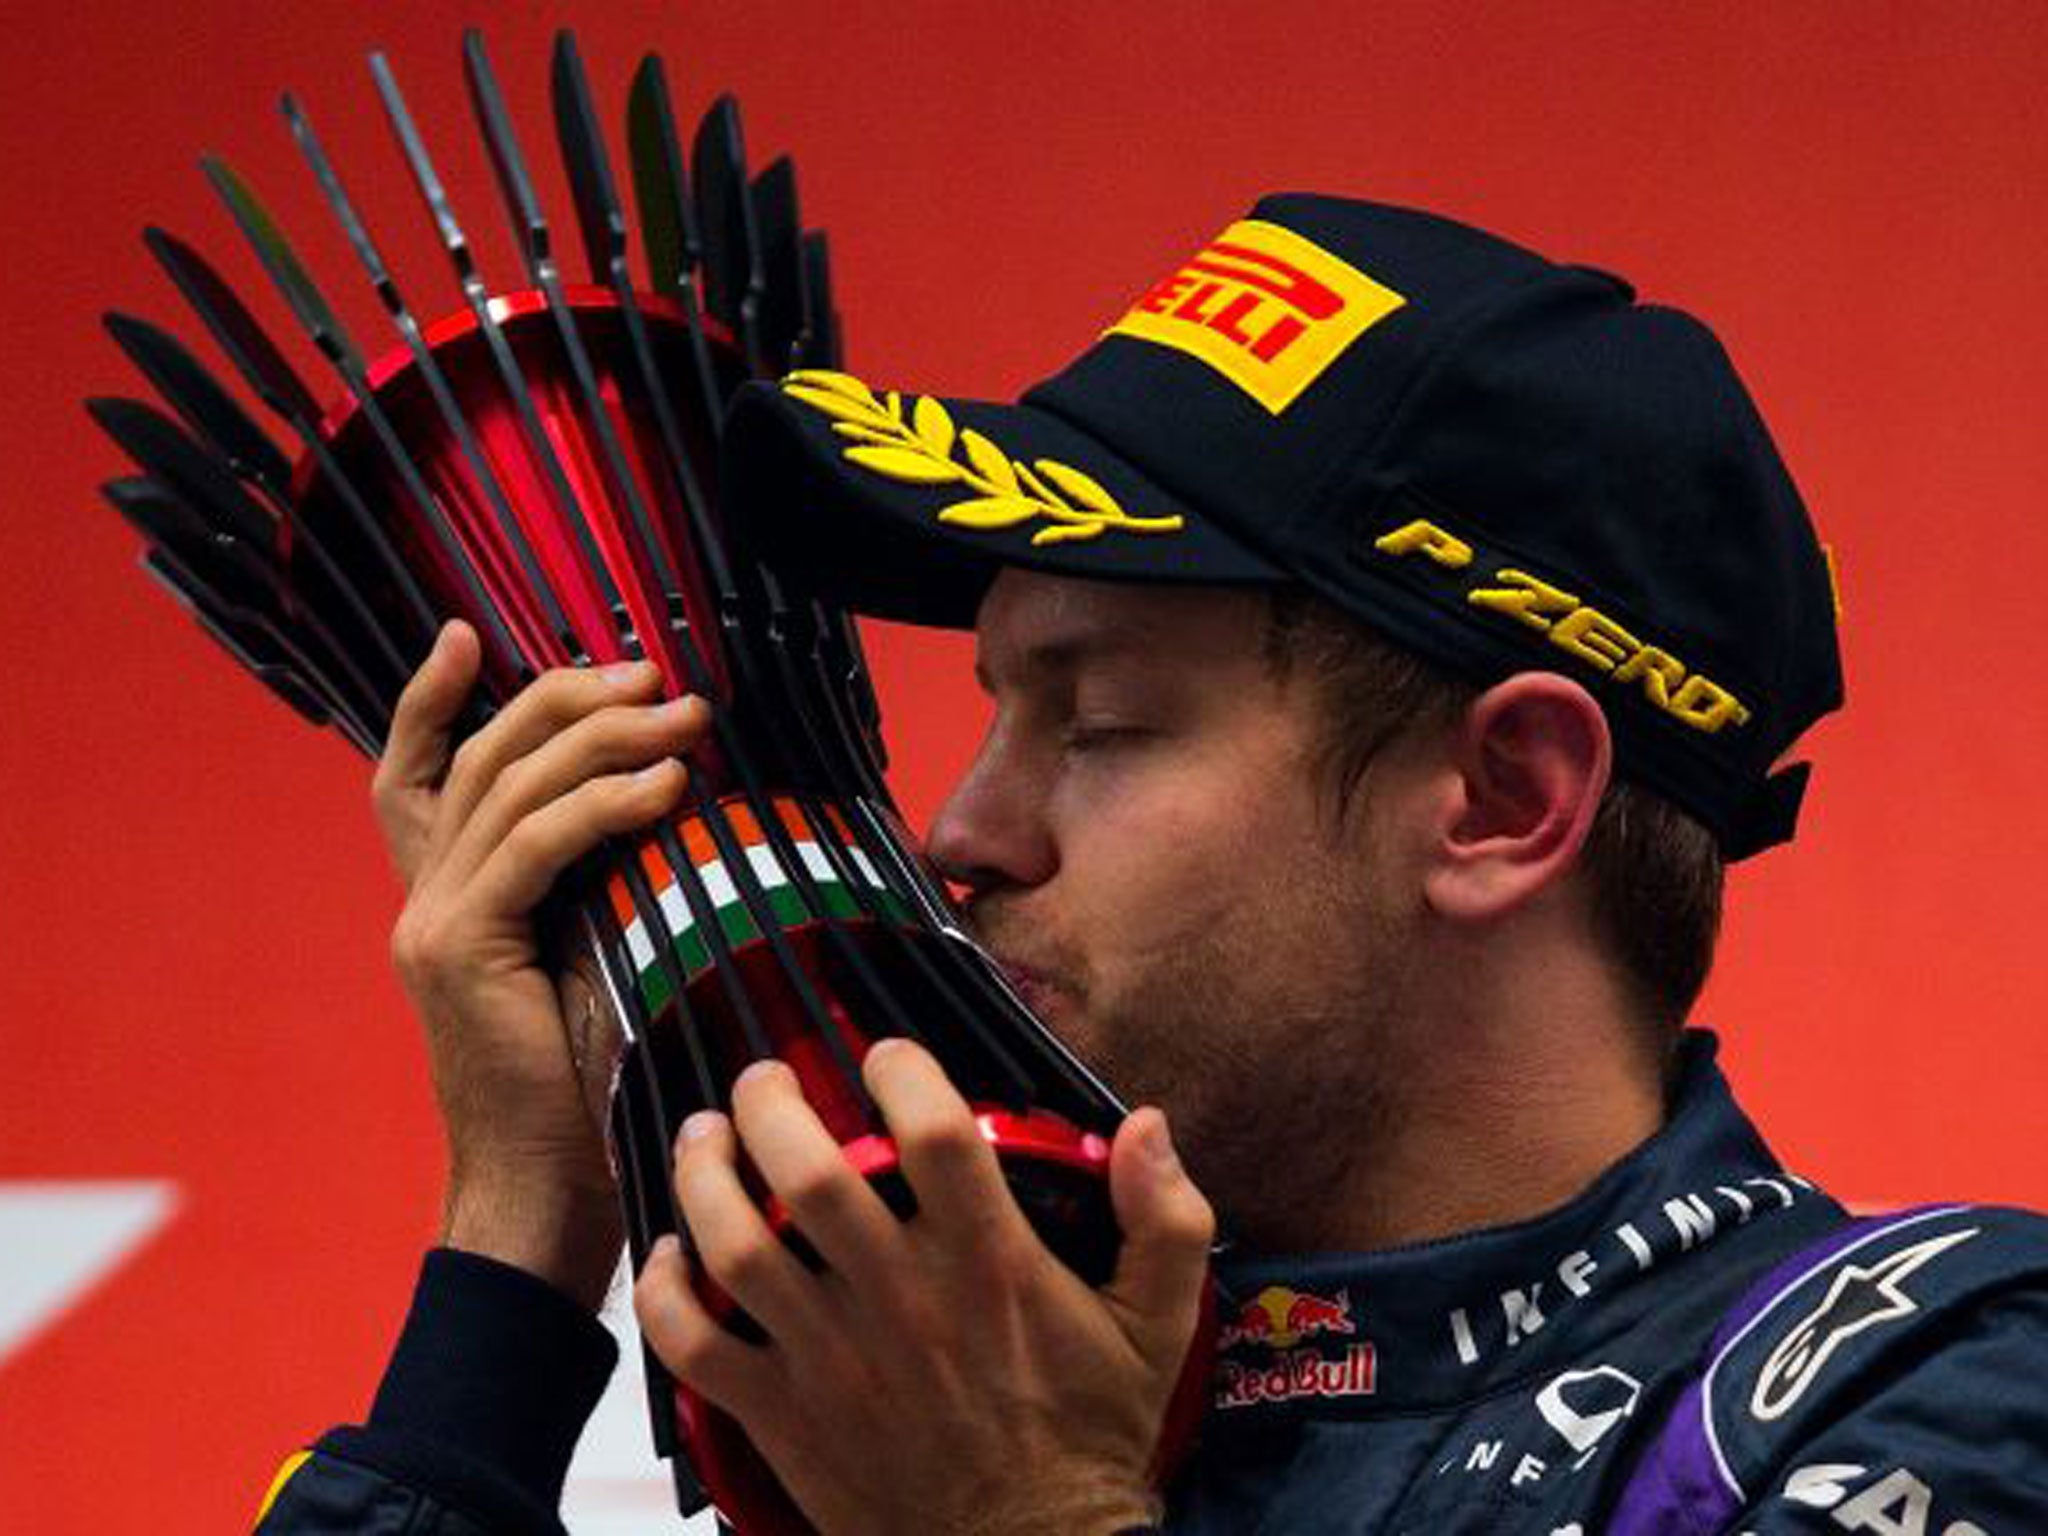 Sebastian Vettel of Germany celebrates on the podium after winning the Indian Grand Prix